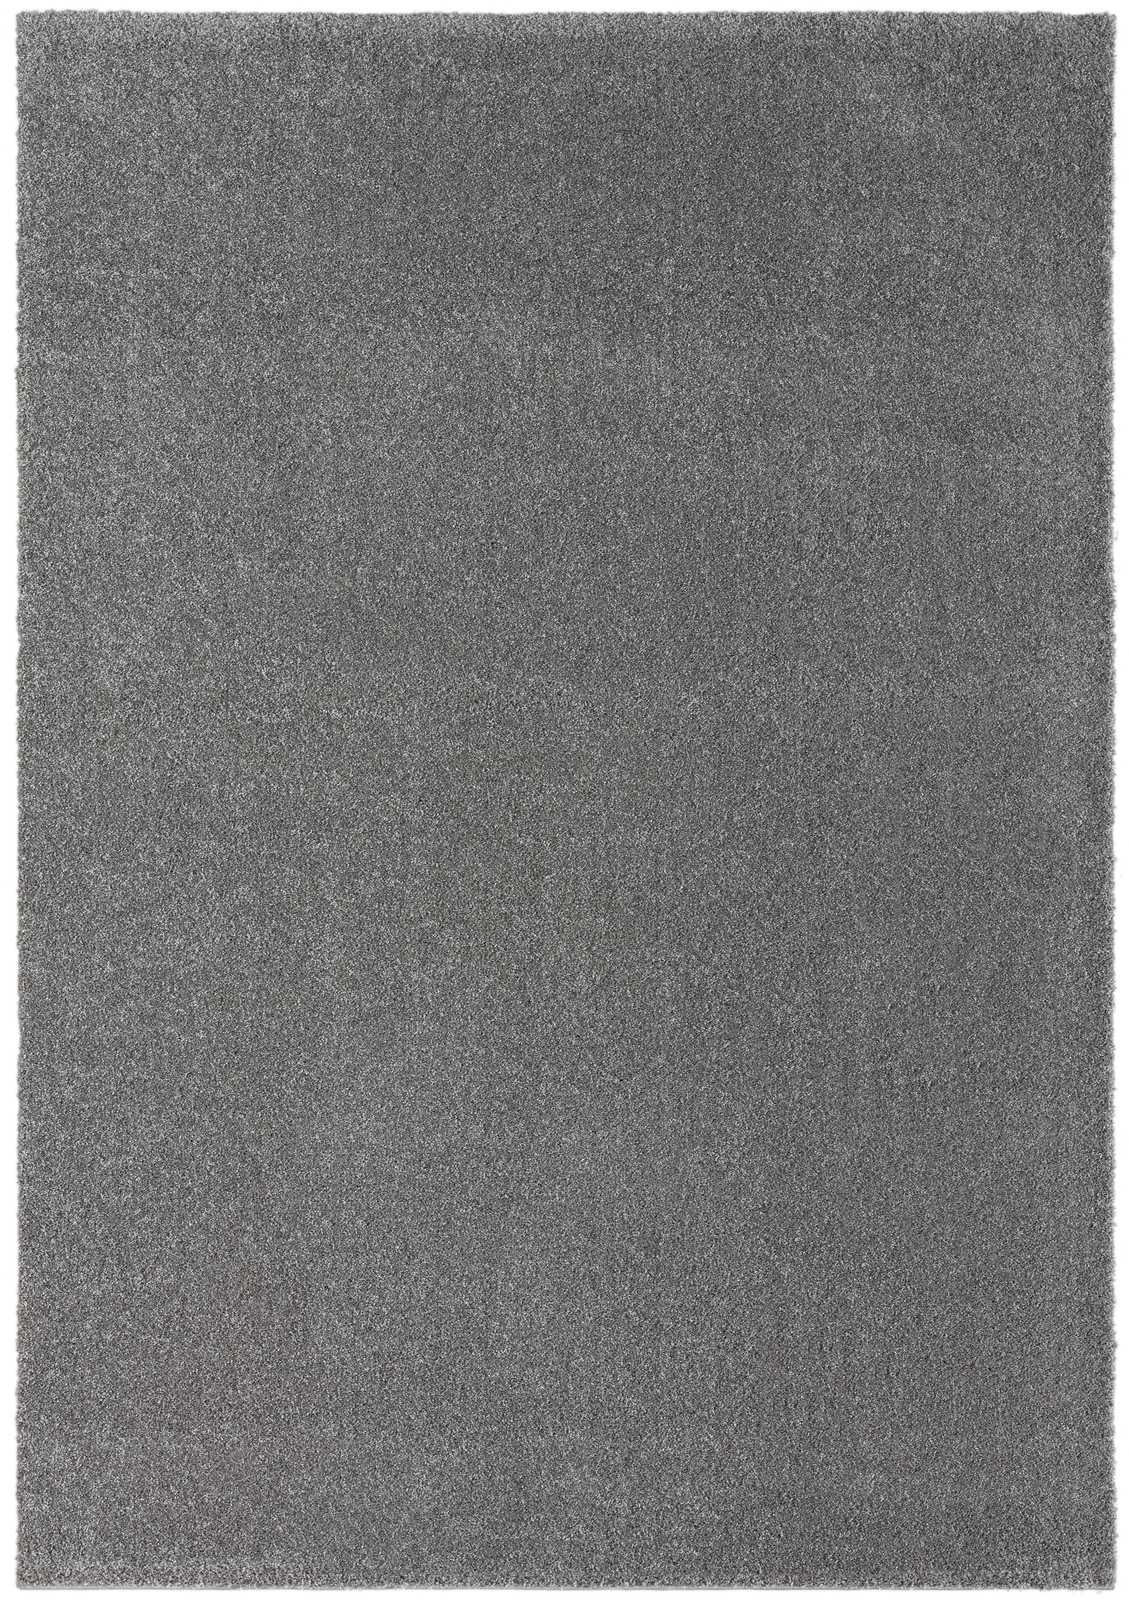             Fluffy short pile carpet in grey - 290 x 200 cm
        